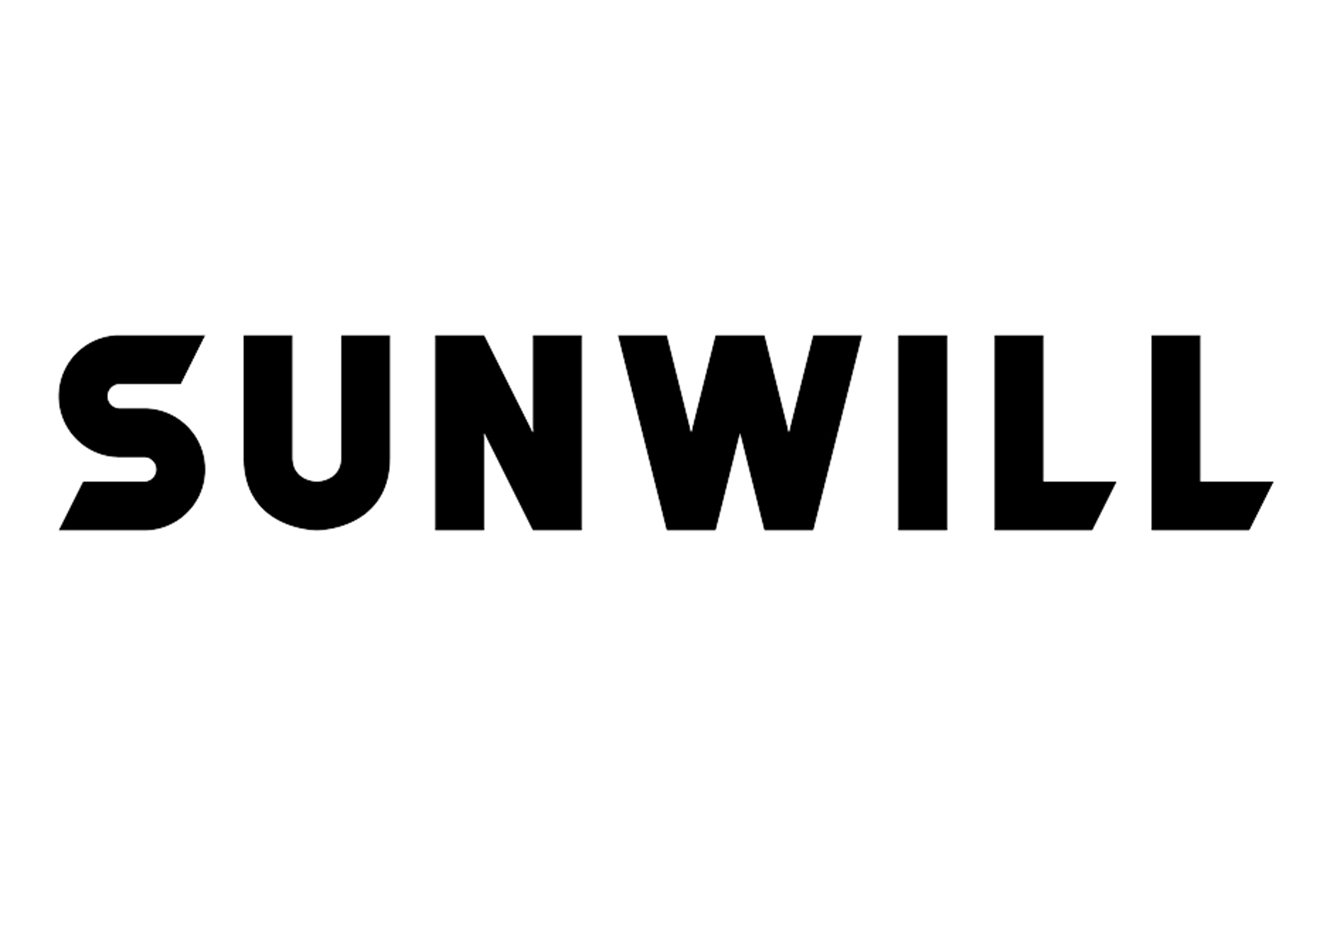 SUNWILL